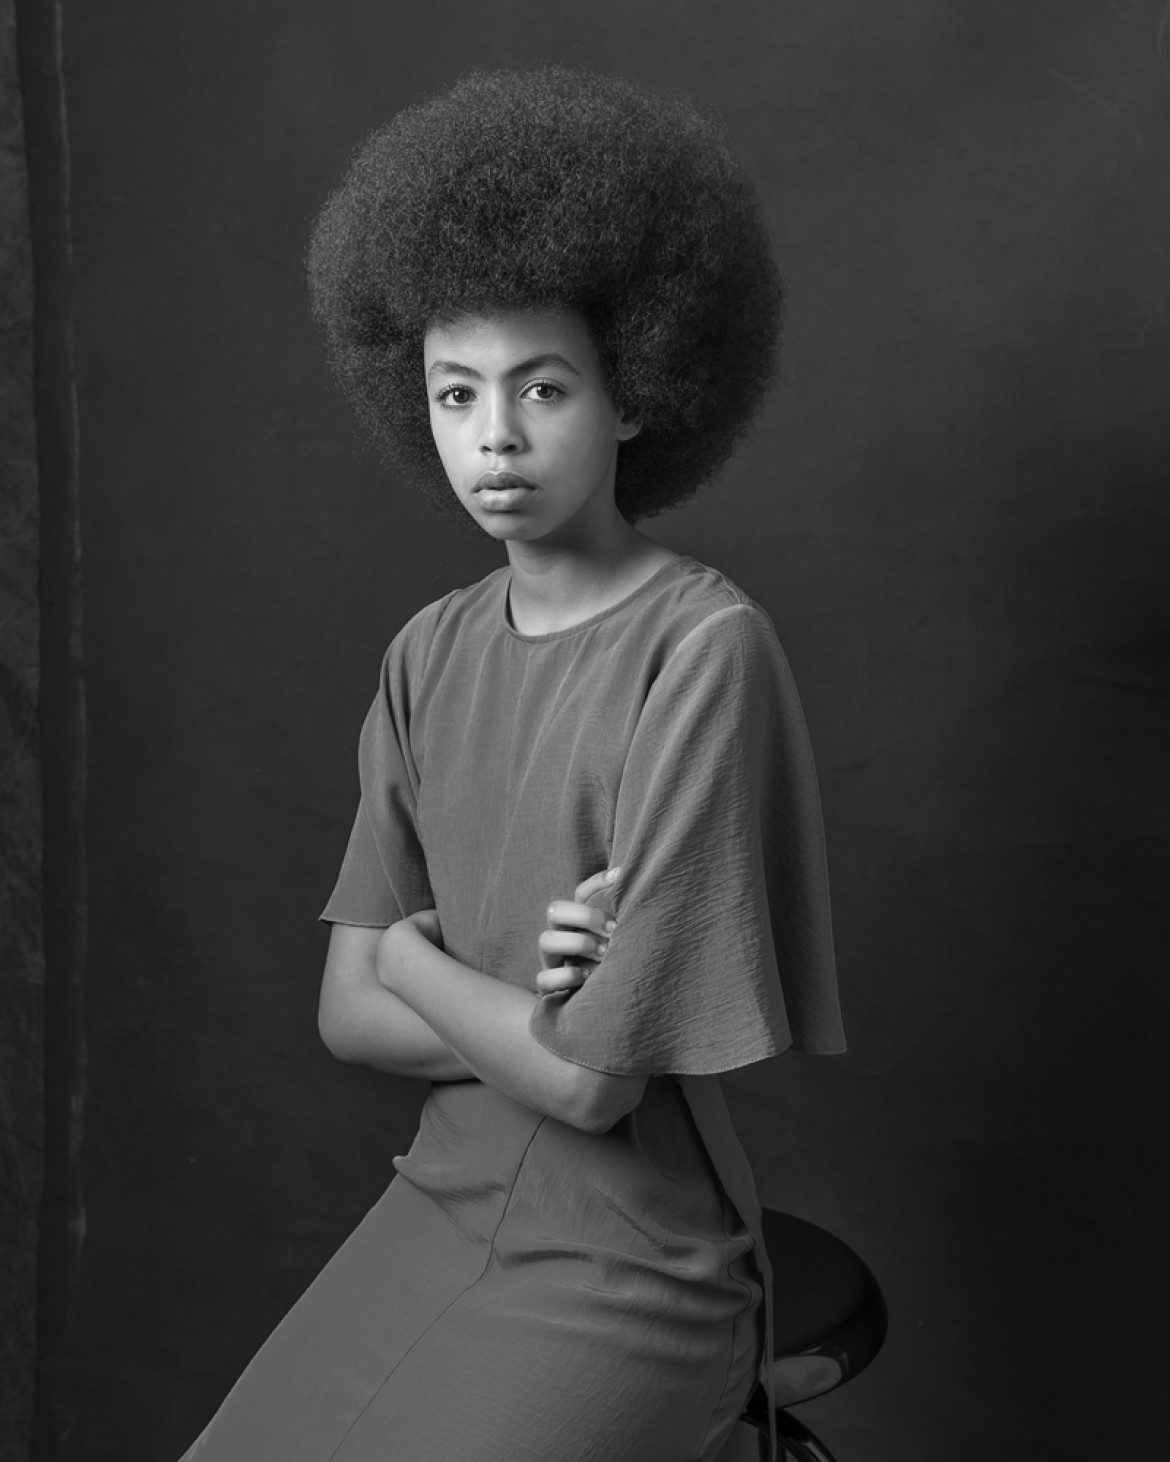 fot. Anna Salek, 2. miejsce w kat. Portrait / B&W Child 2020